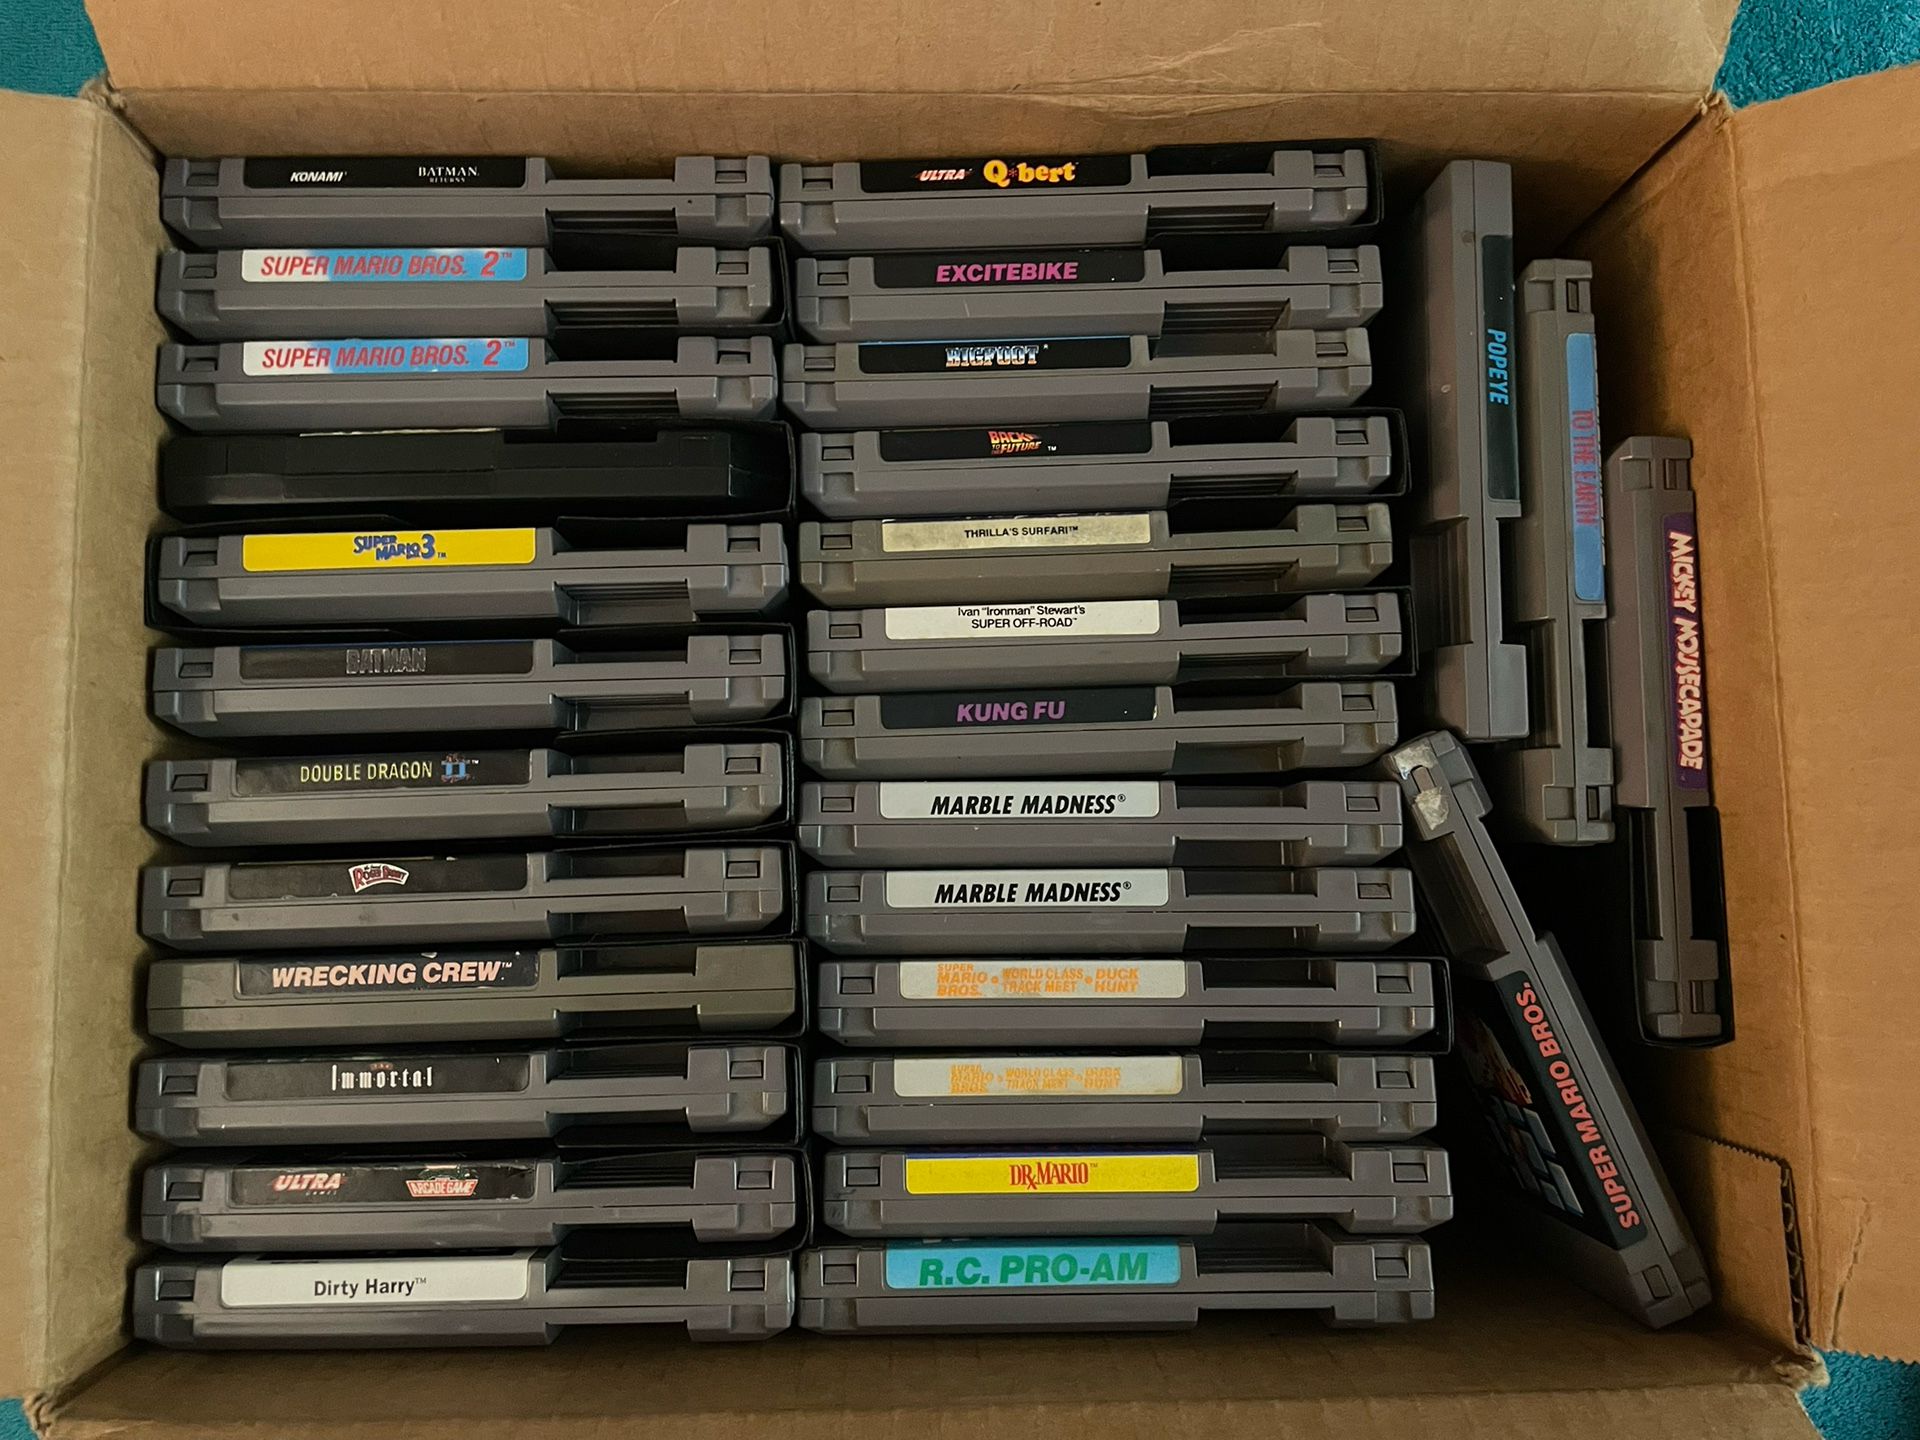 Nintendo NES Games 